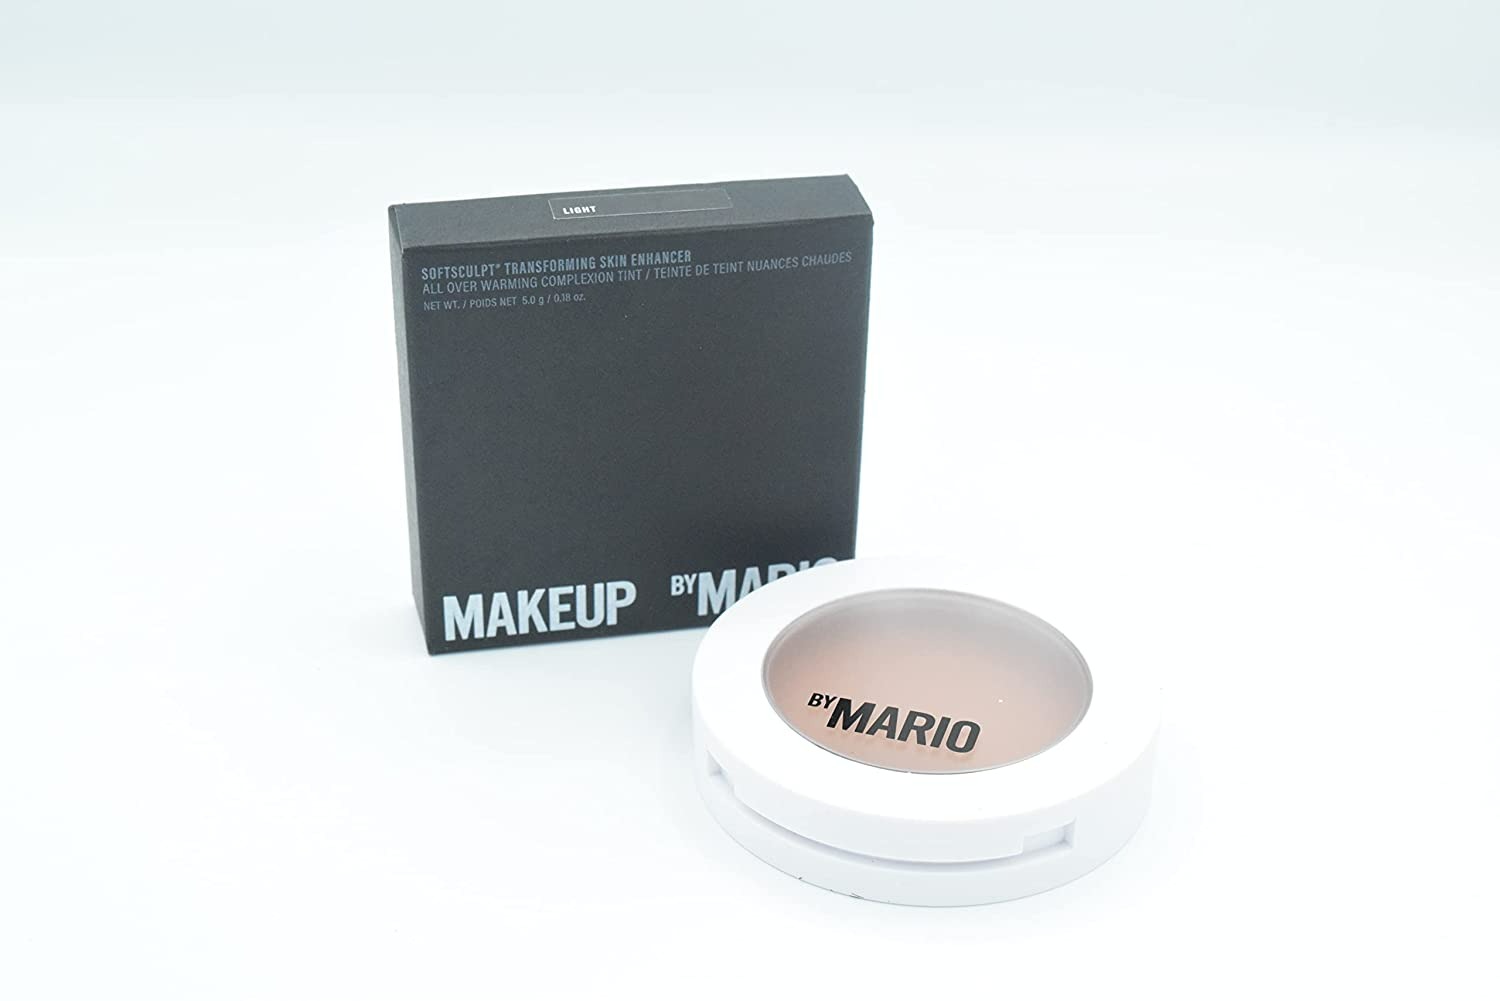 Makeup by Mario SoftSculpt Transforming Skin Enhancer-1